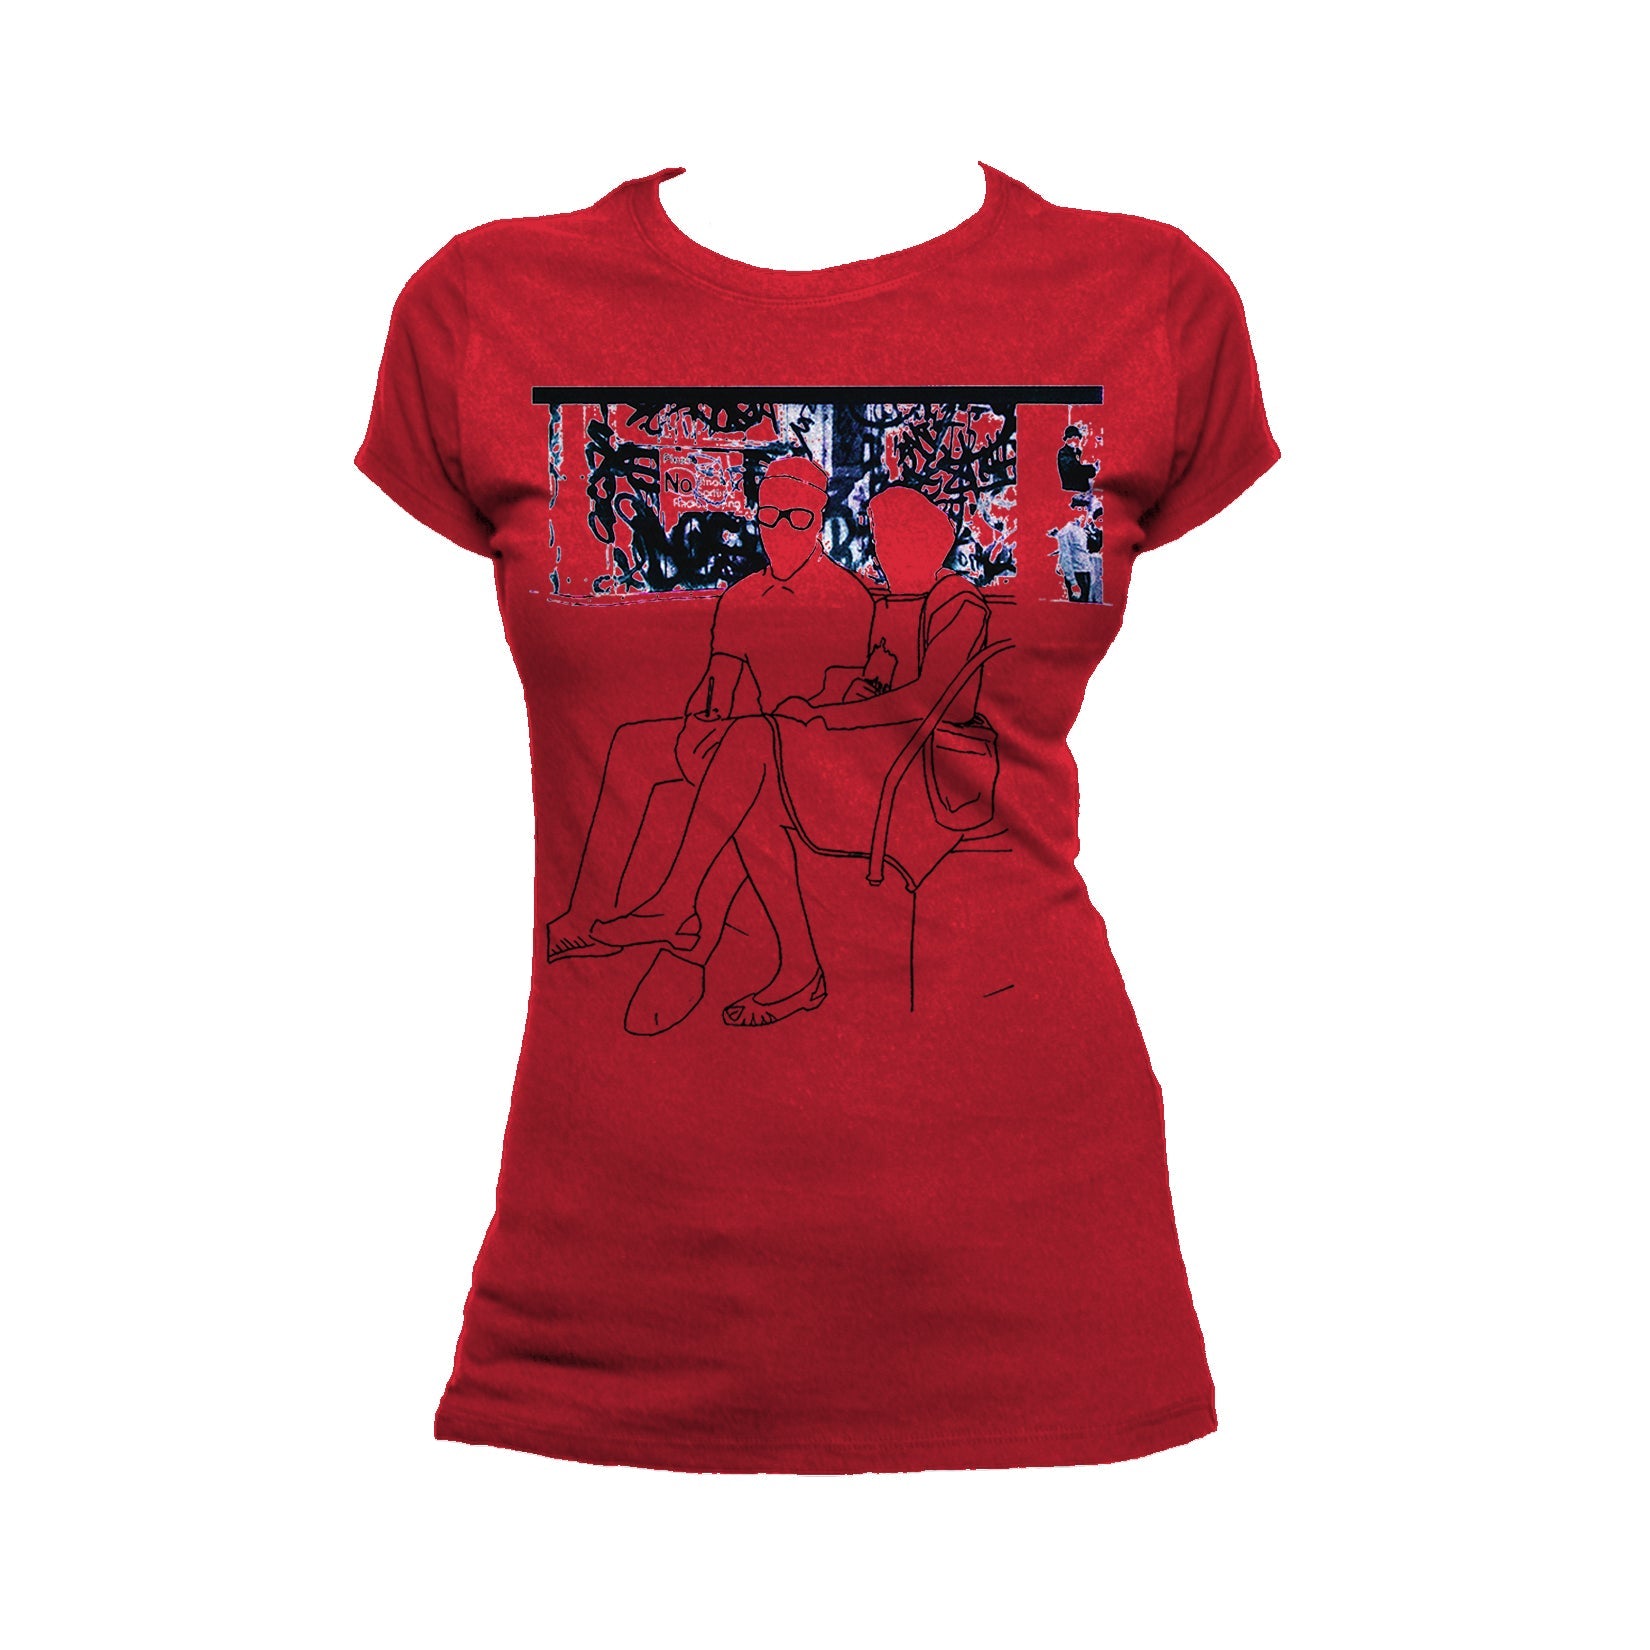 US Brand X Old's Kool Ghetto Love Official Women's T-Shirt ()